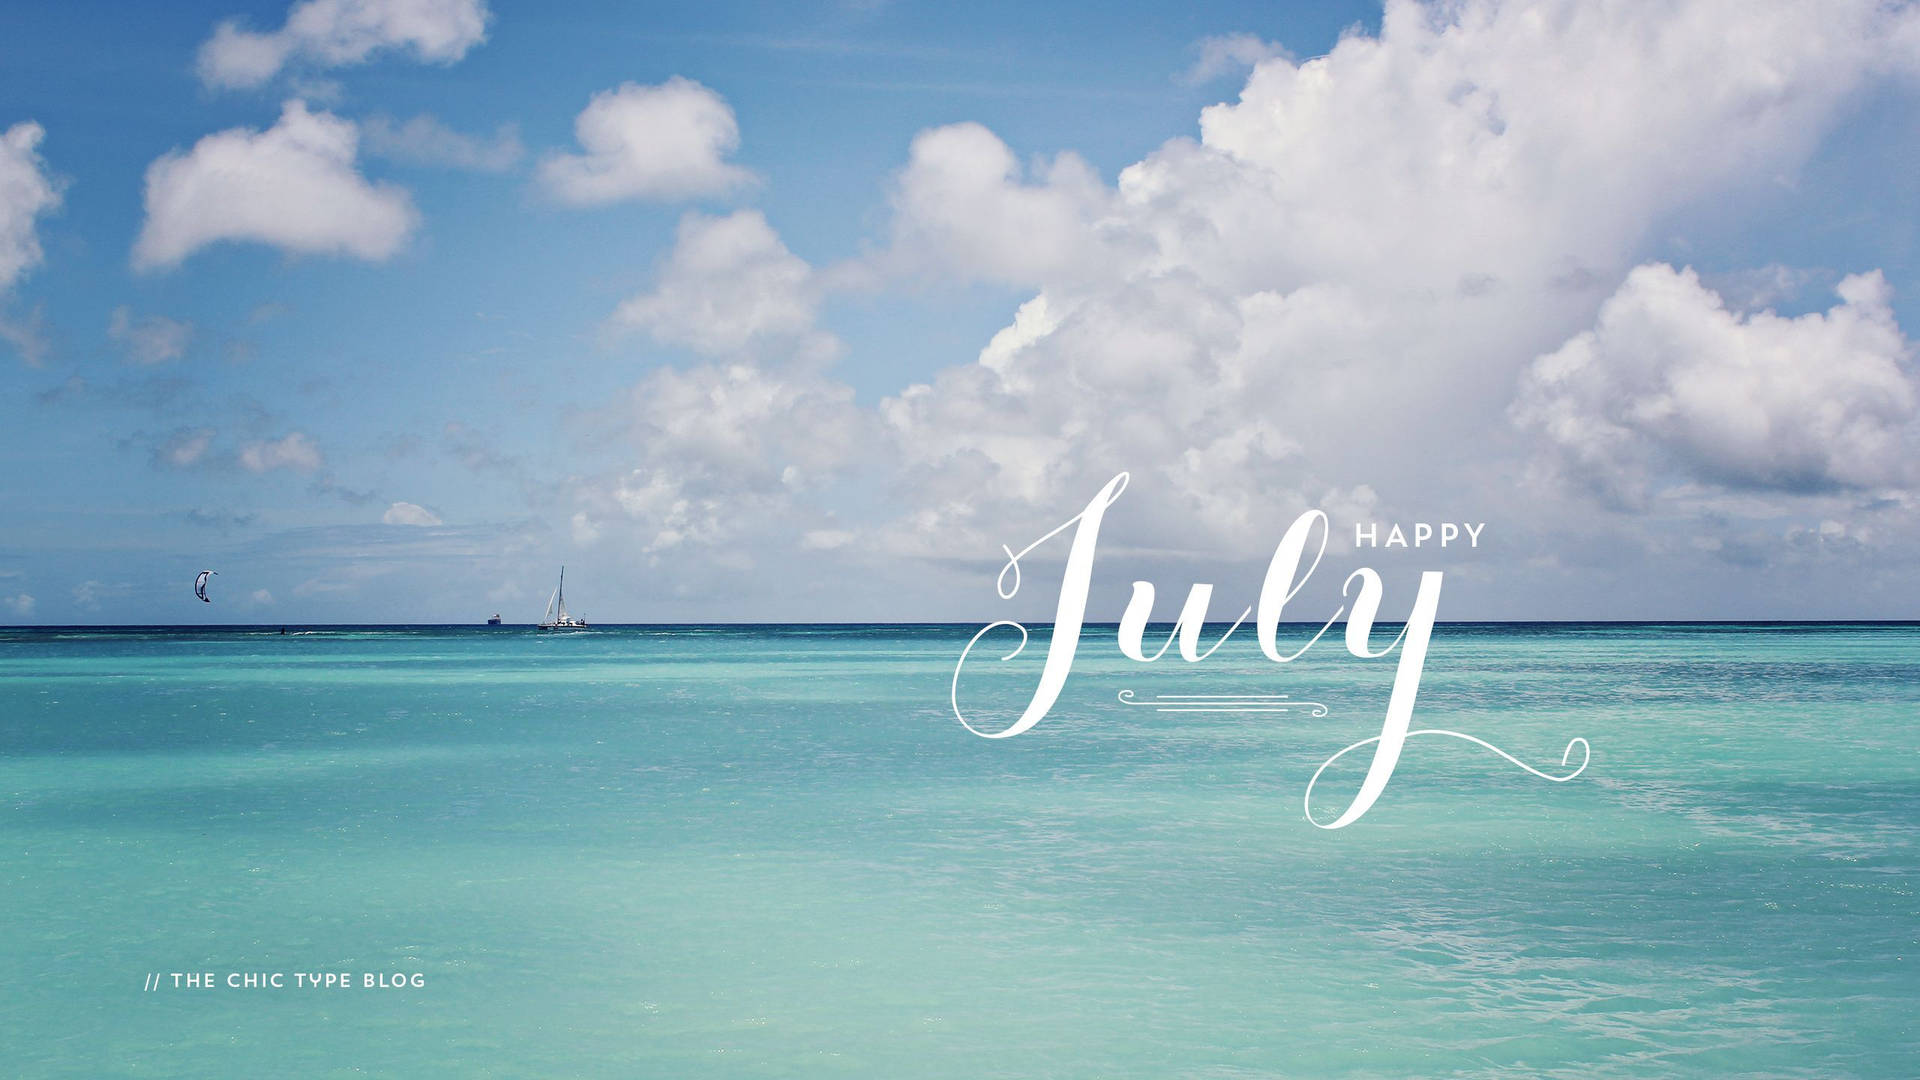 Make Waves this July Wallpaper